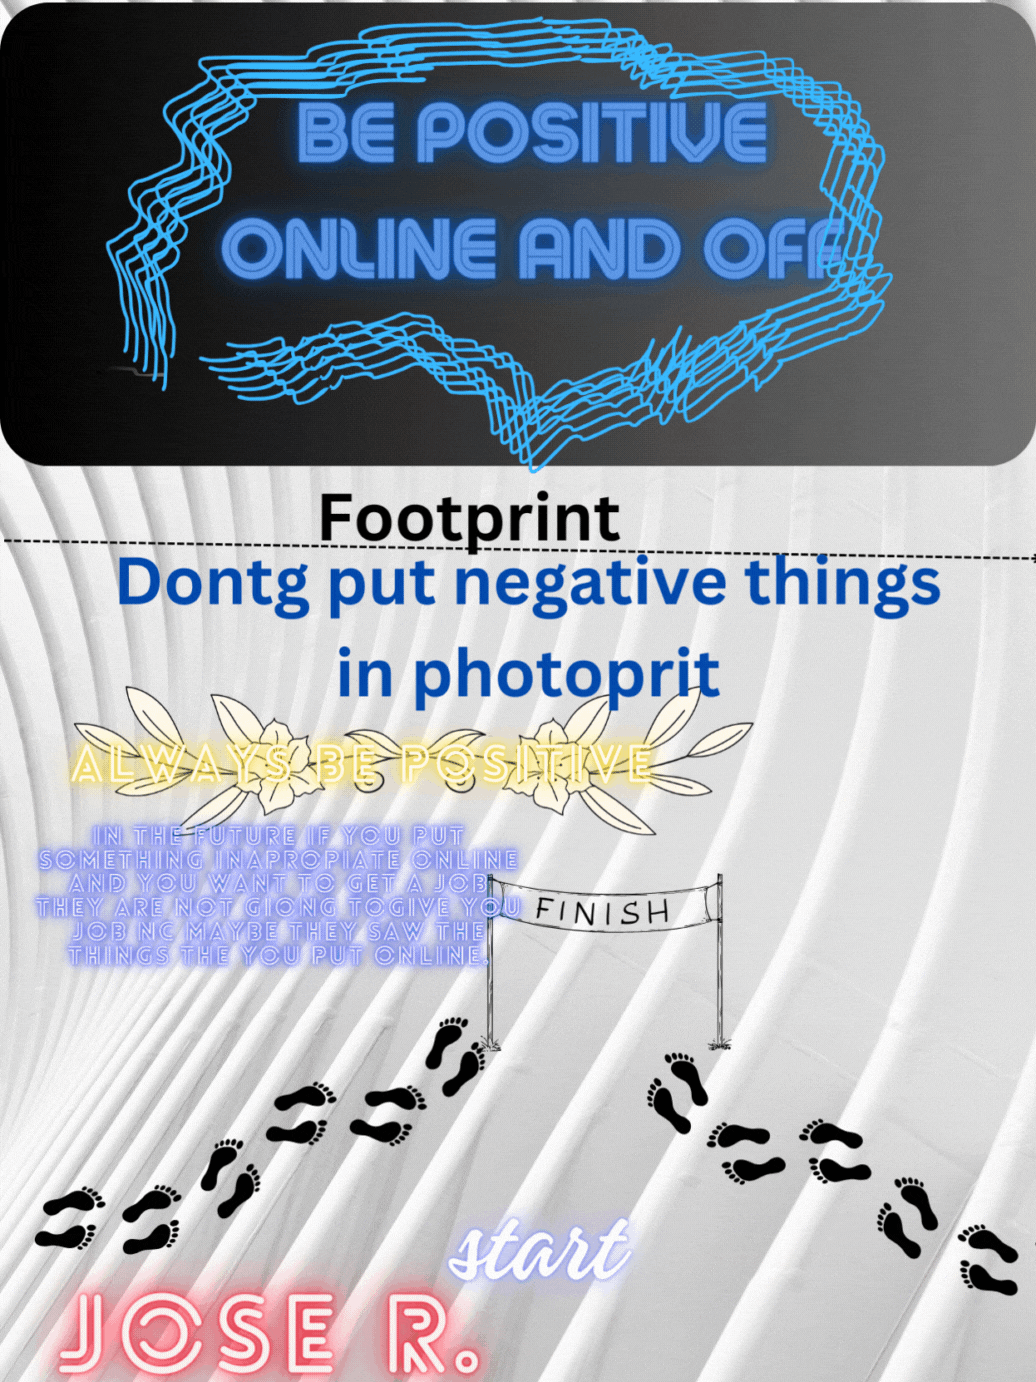 Digital Footprint Poster - Jose R